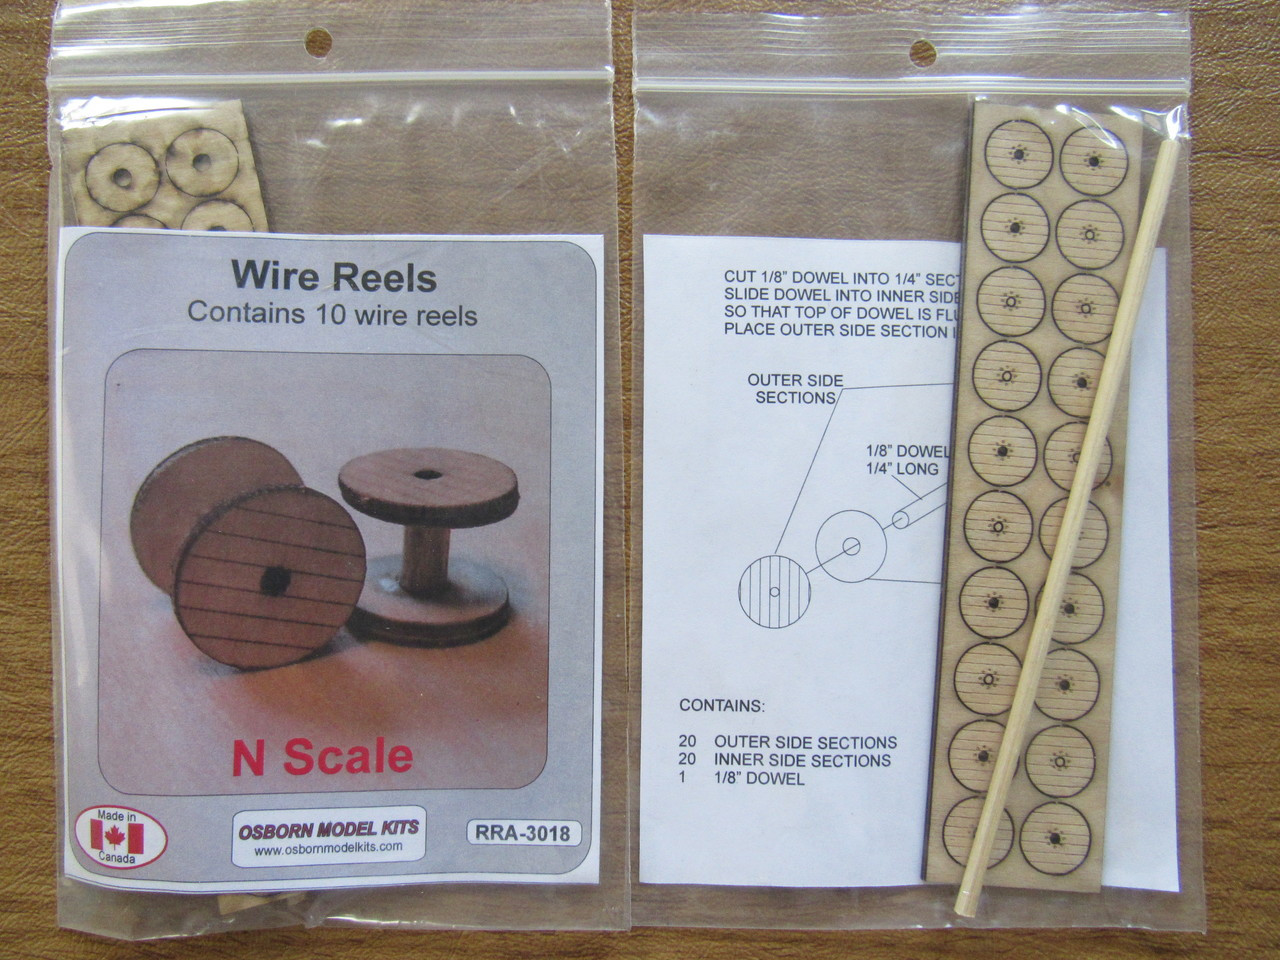 Osborn Model Kits N Scale Wire Reels 10 pack Kit RRA-3018 - Bob